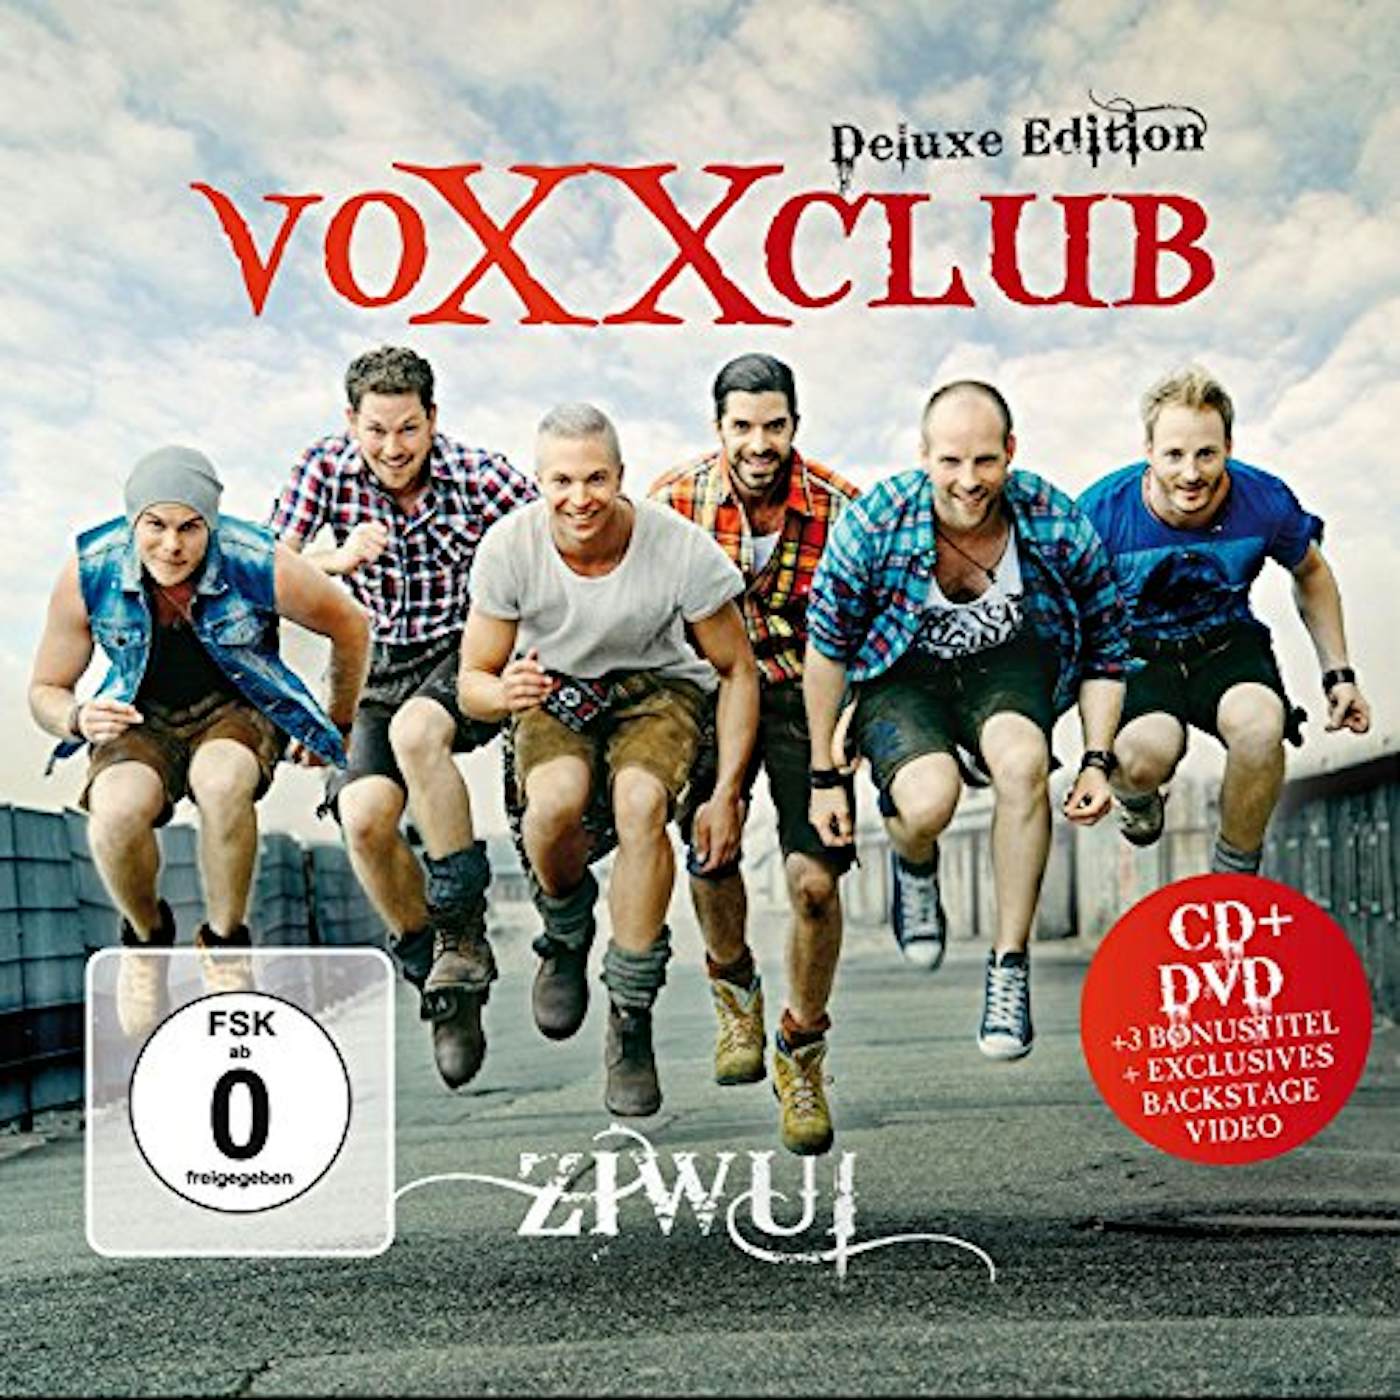 voXXclub ZIWUI CD